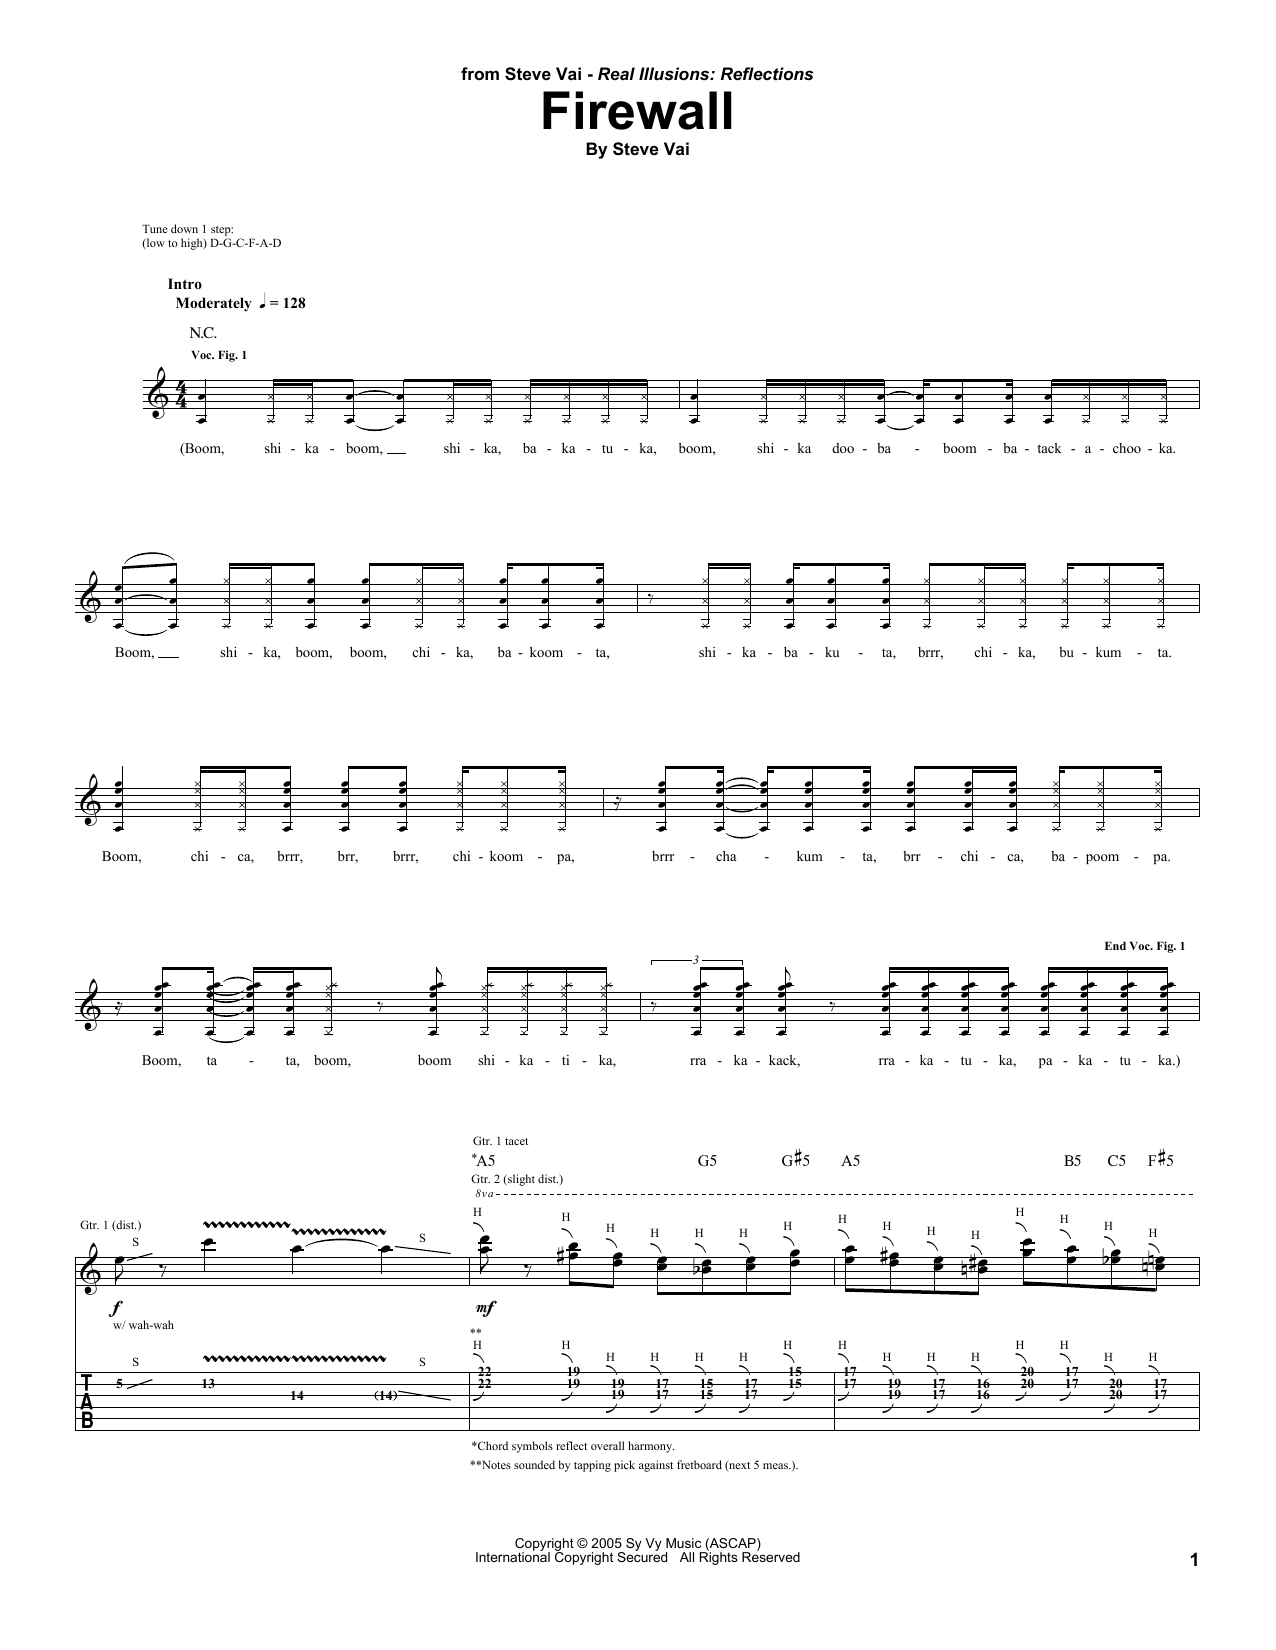 Steve Vai Firewall Sheet Music Notes & Chords for Guitar Tab - Download or Print PDF